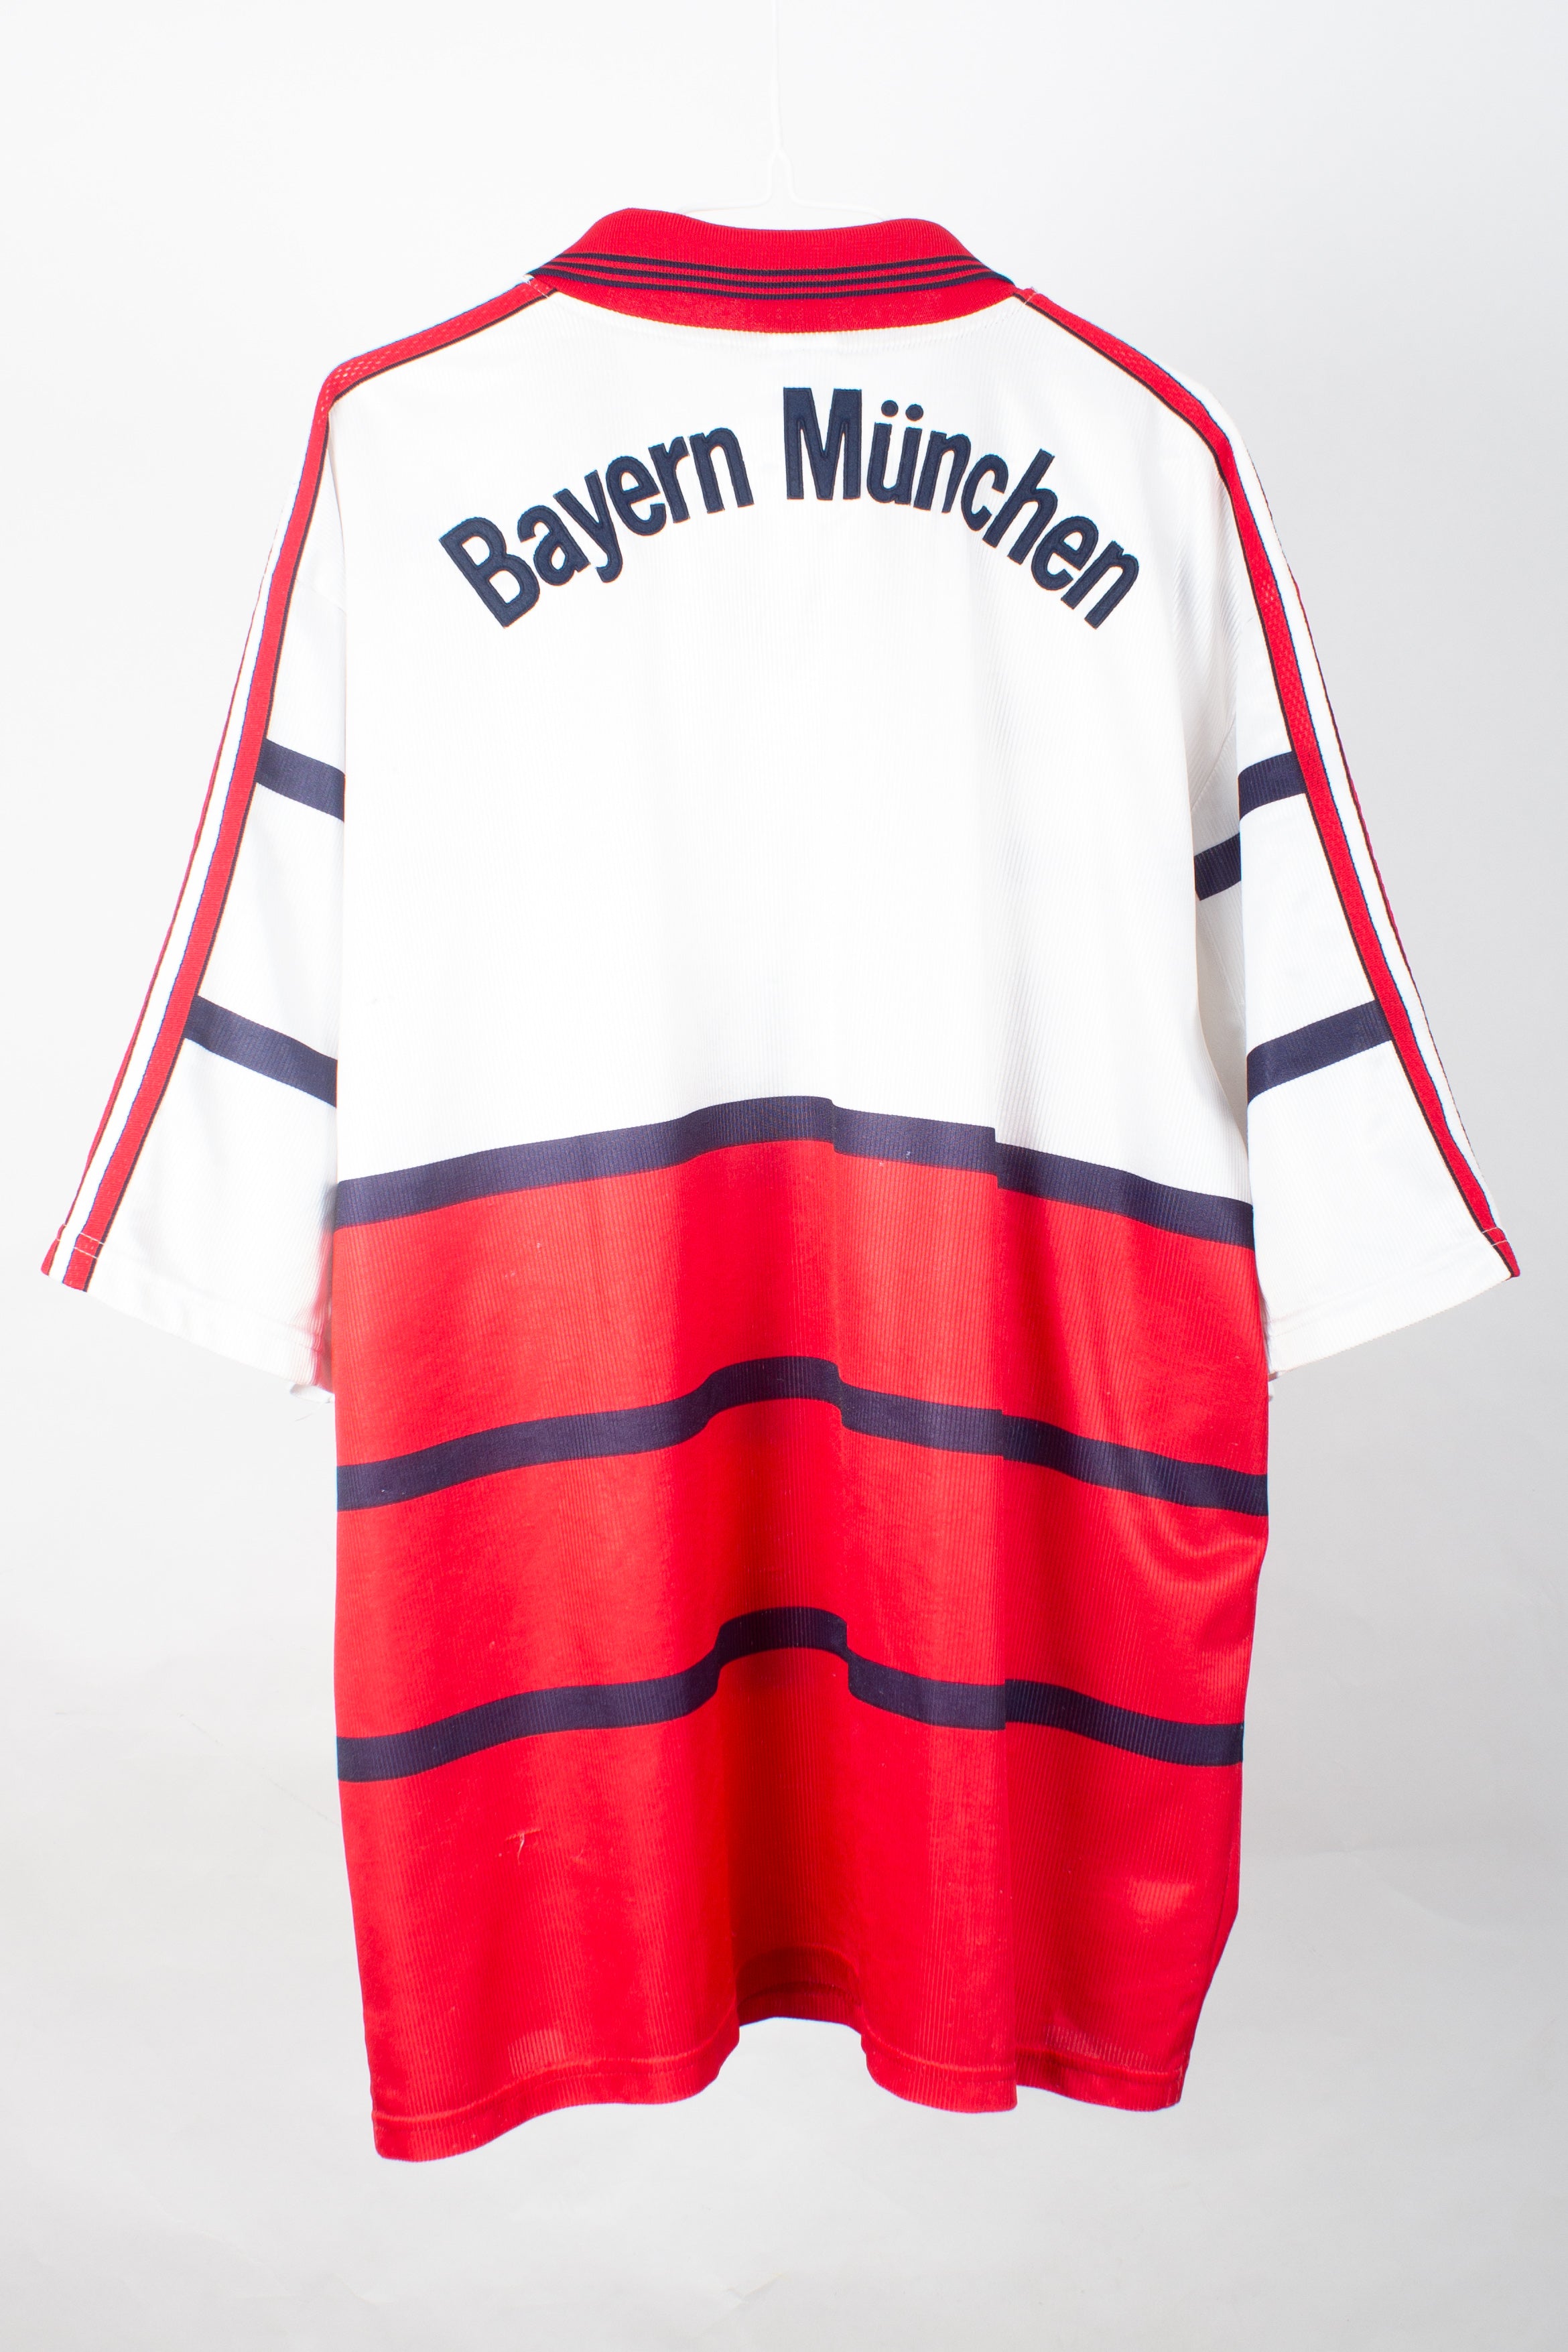 Bayern Munich 1998/00 Away Shirt (XXL)